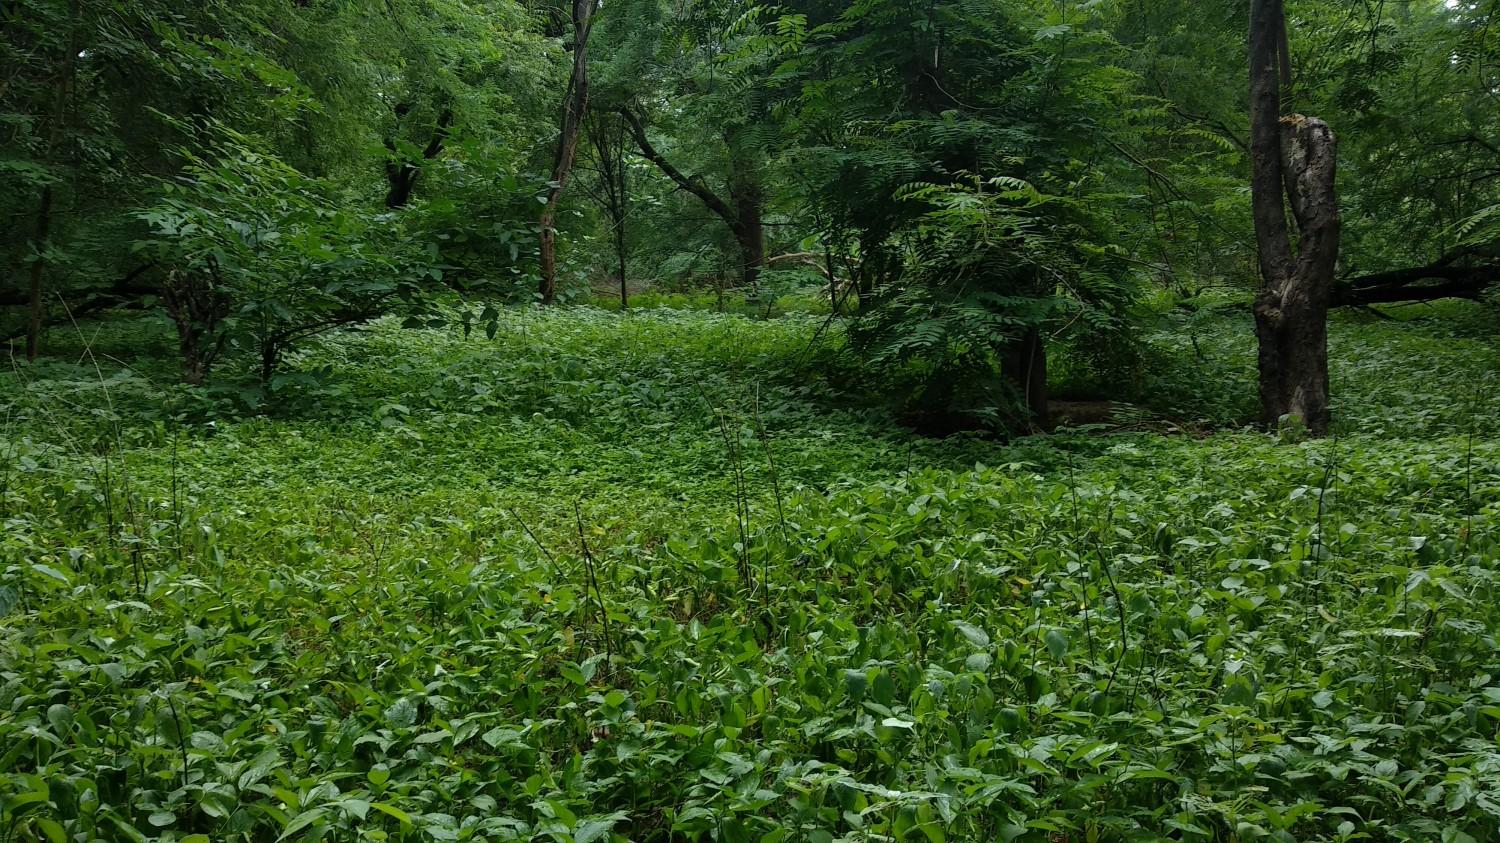 Indroda Nature Park Ahmedabad